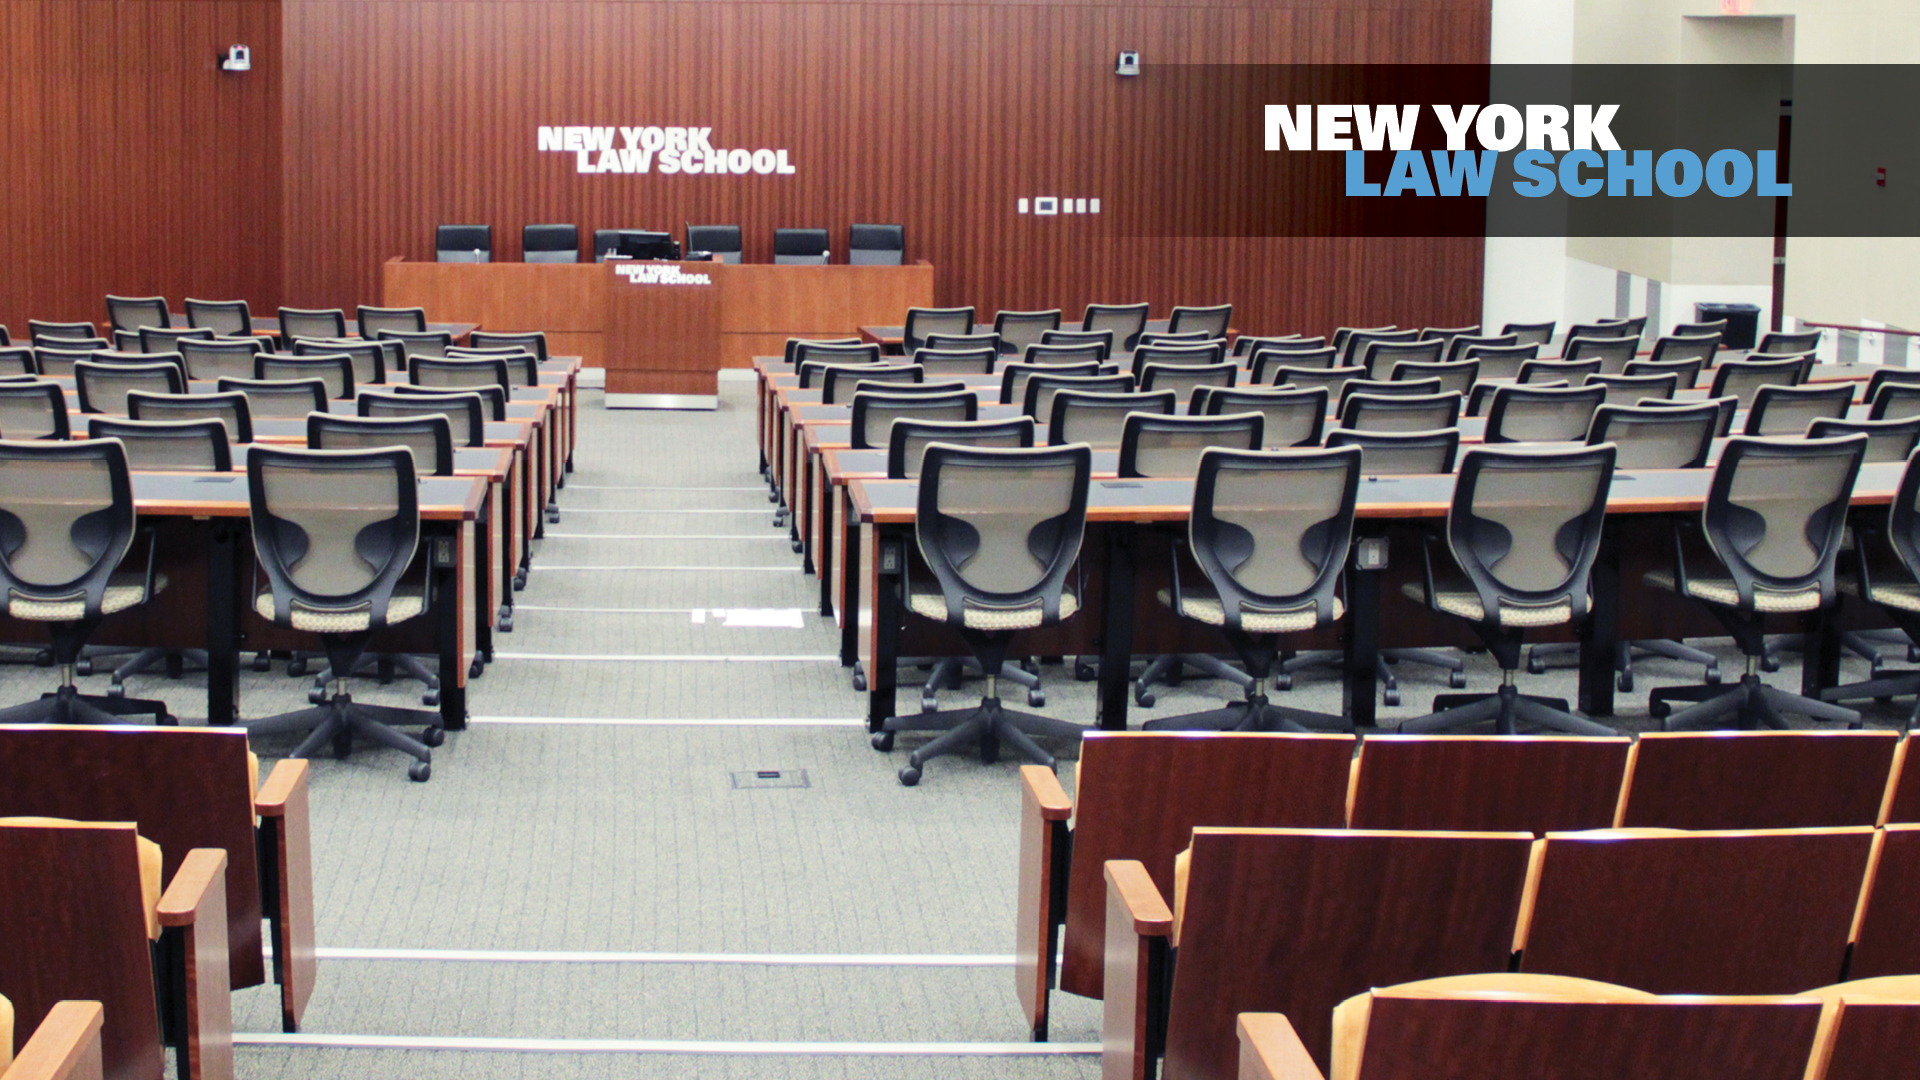 New York Law School auditorium